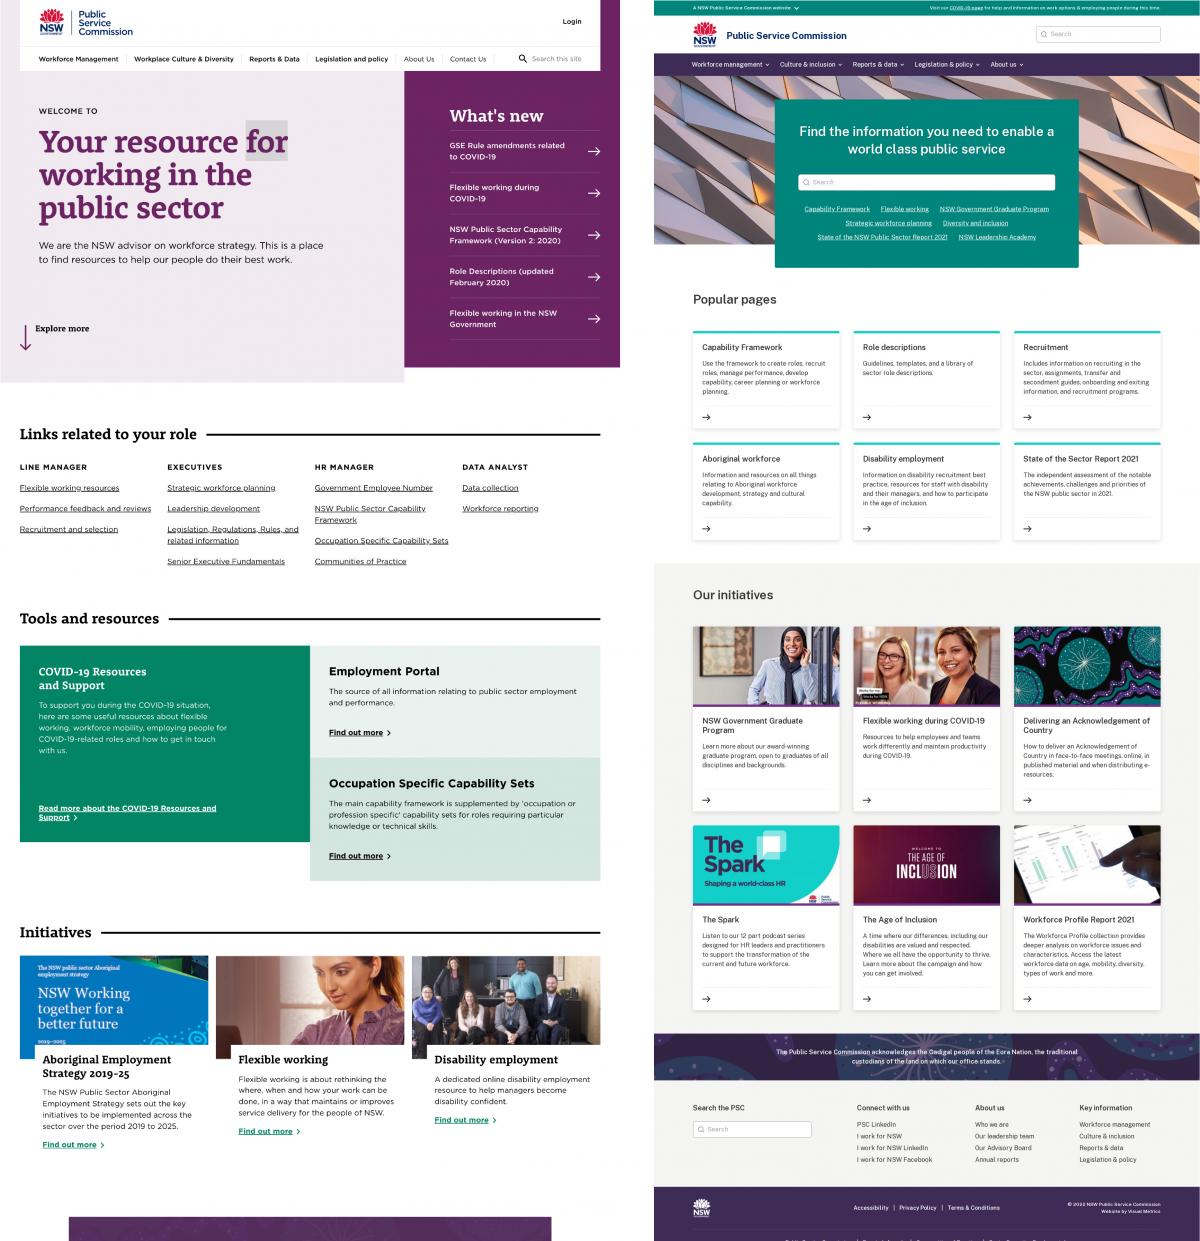 The Public Service Commissionâs website Before and After